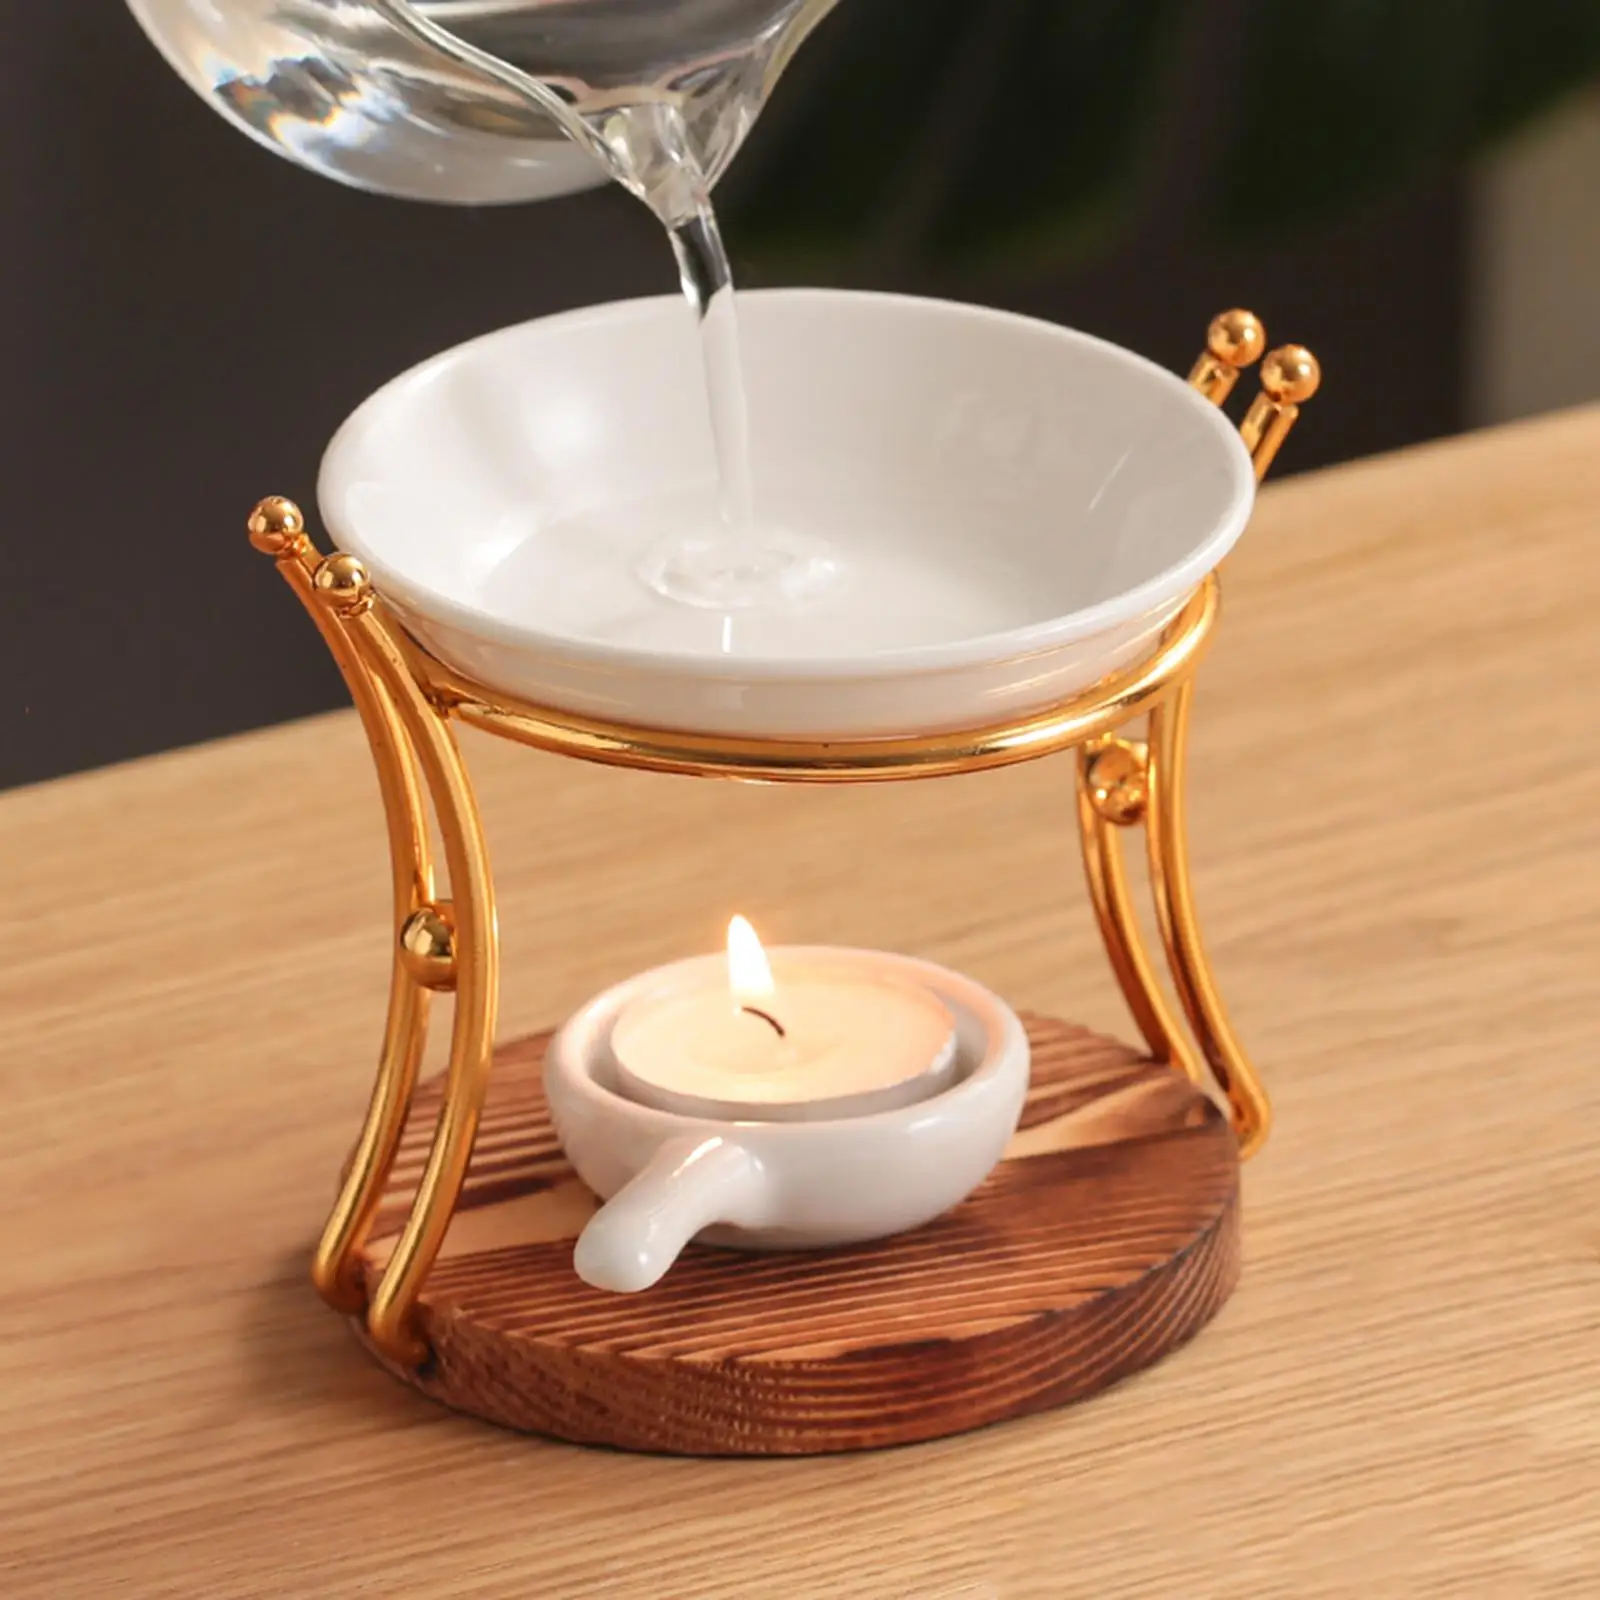 Oil Burner Candle Holder Wax Melt Burner Ceramic with Candle Spoon Oil Warmer for Spa Room Yoga Decoration Ornament